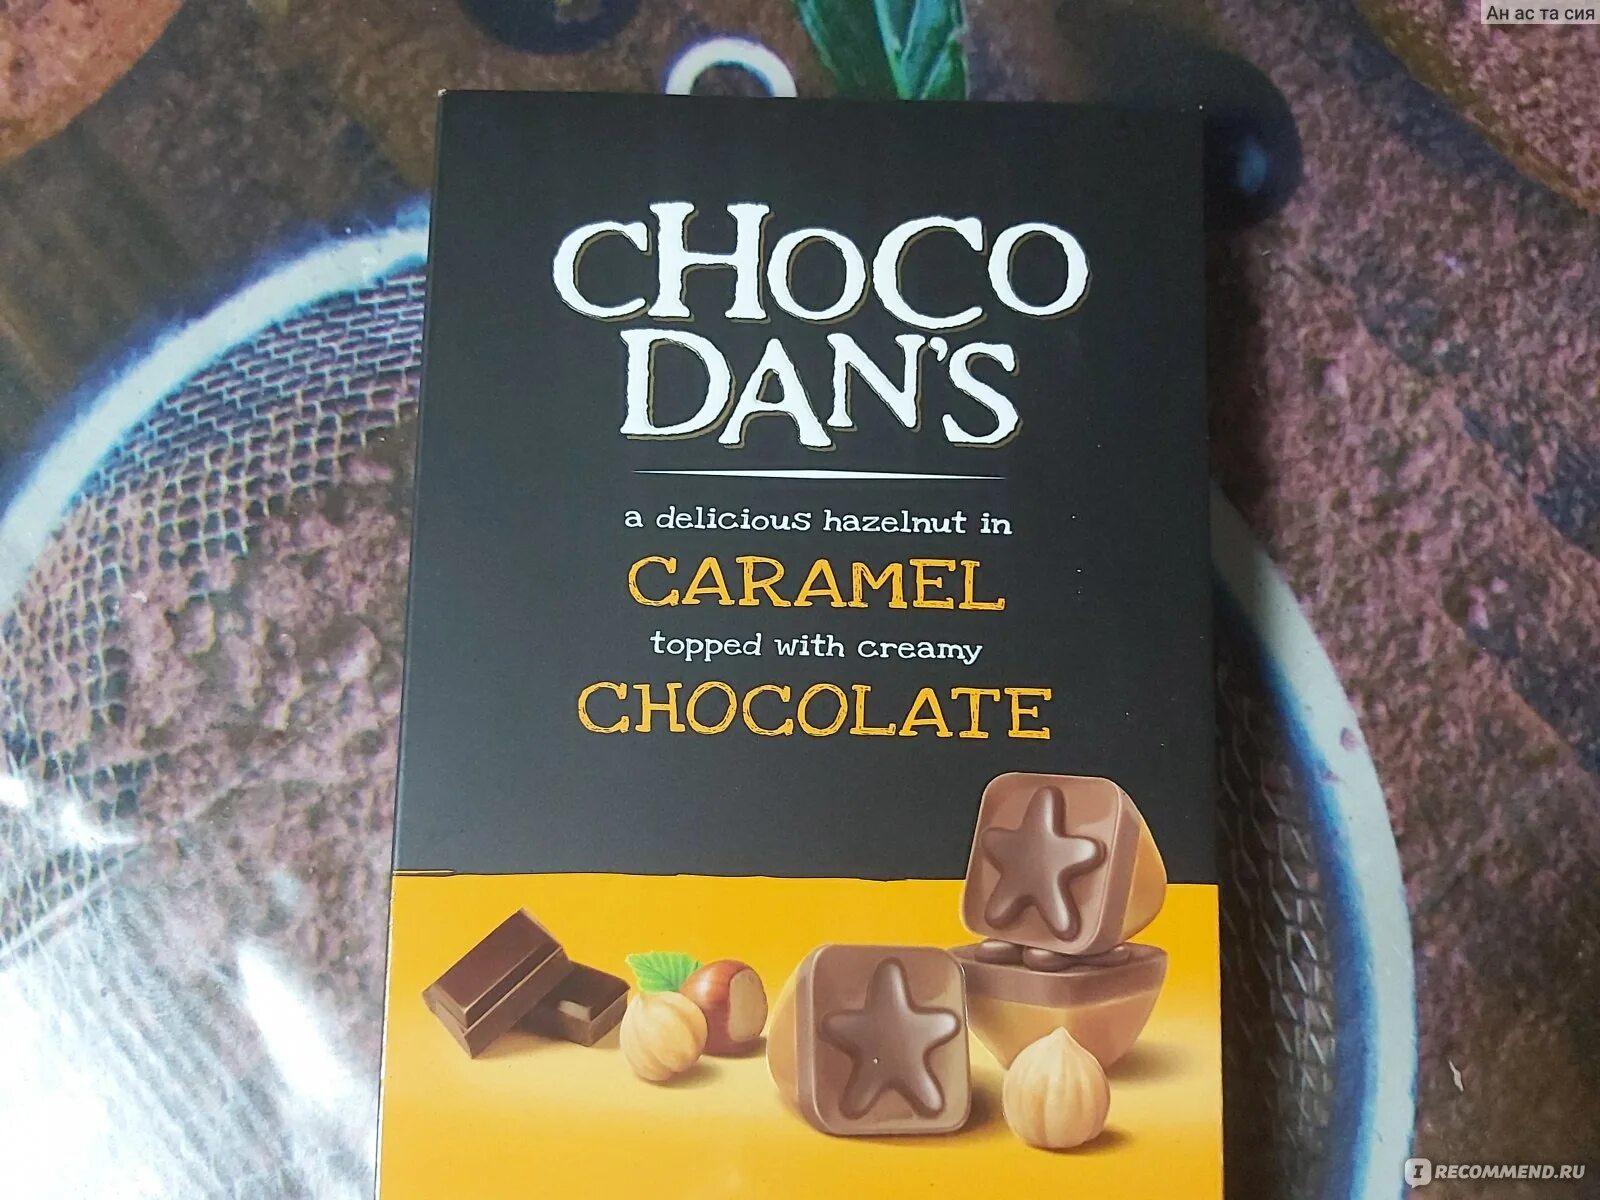 Шоко цена. Конфеты Шокодан'с с фундуком. Чоко данс конфеты. Шоколад Choco dans. Конфеты с фундуком и карамелью в коробке.